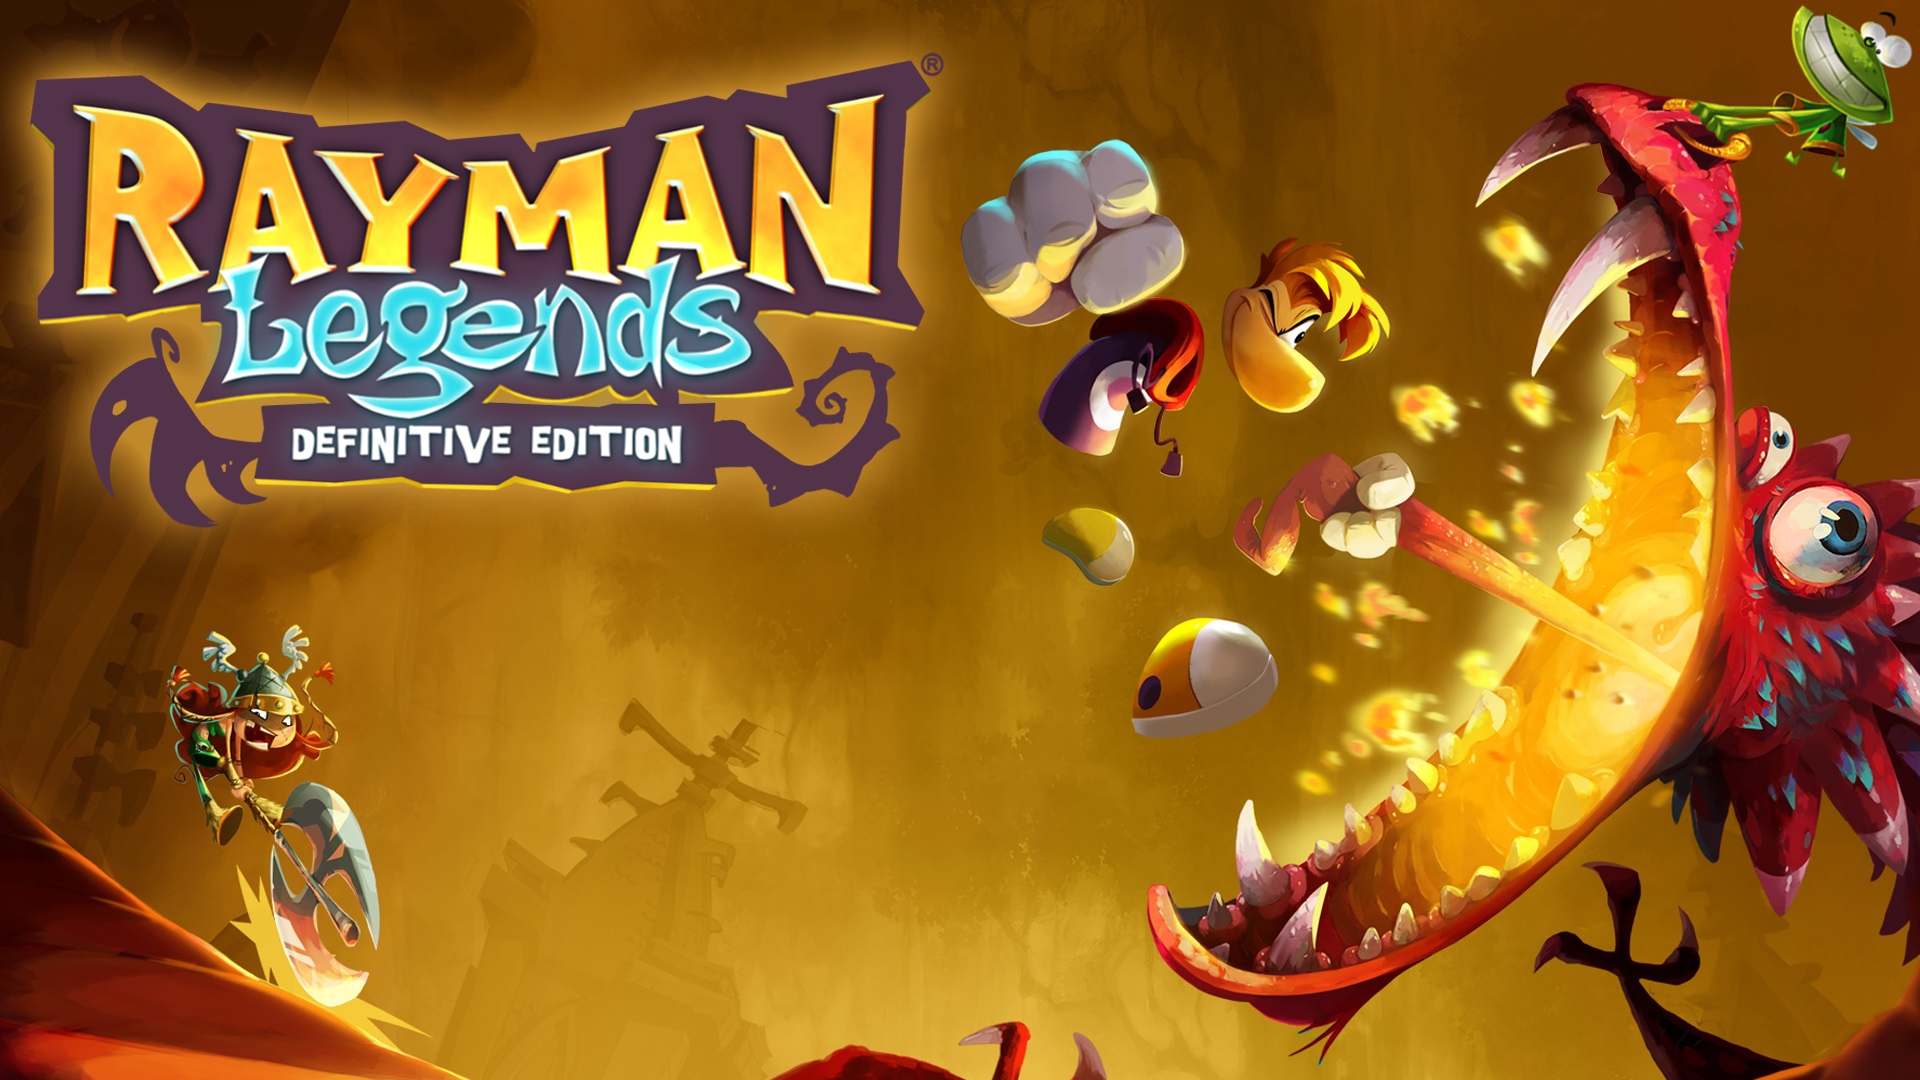 Rayman Legends Ps4 e Ps5 Psn Mídia Digital - DS GAMES PRO